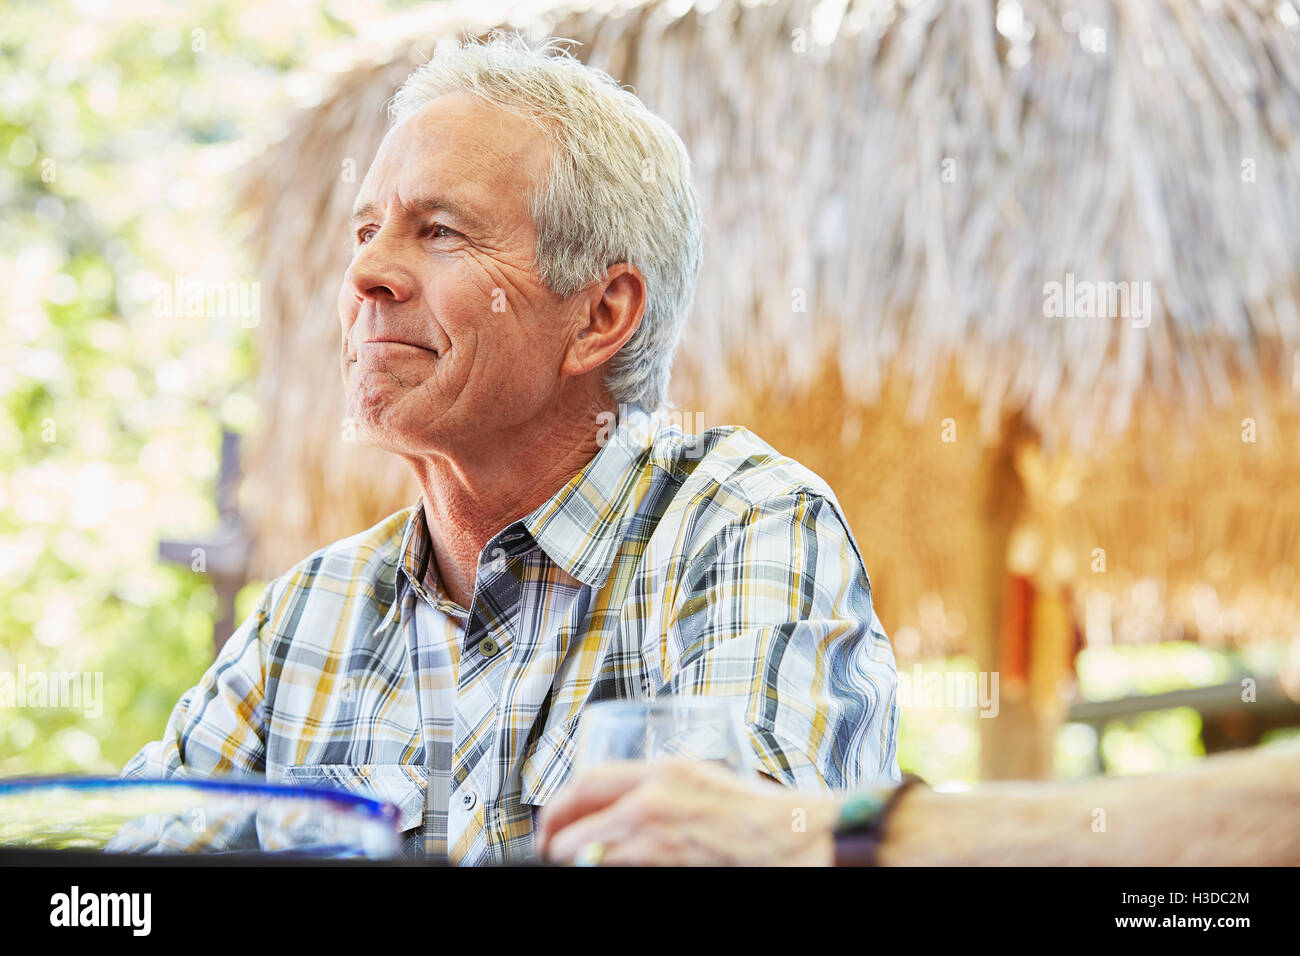 Smiling senior man with grey hair sitting outdoors. Stock Photo